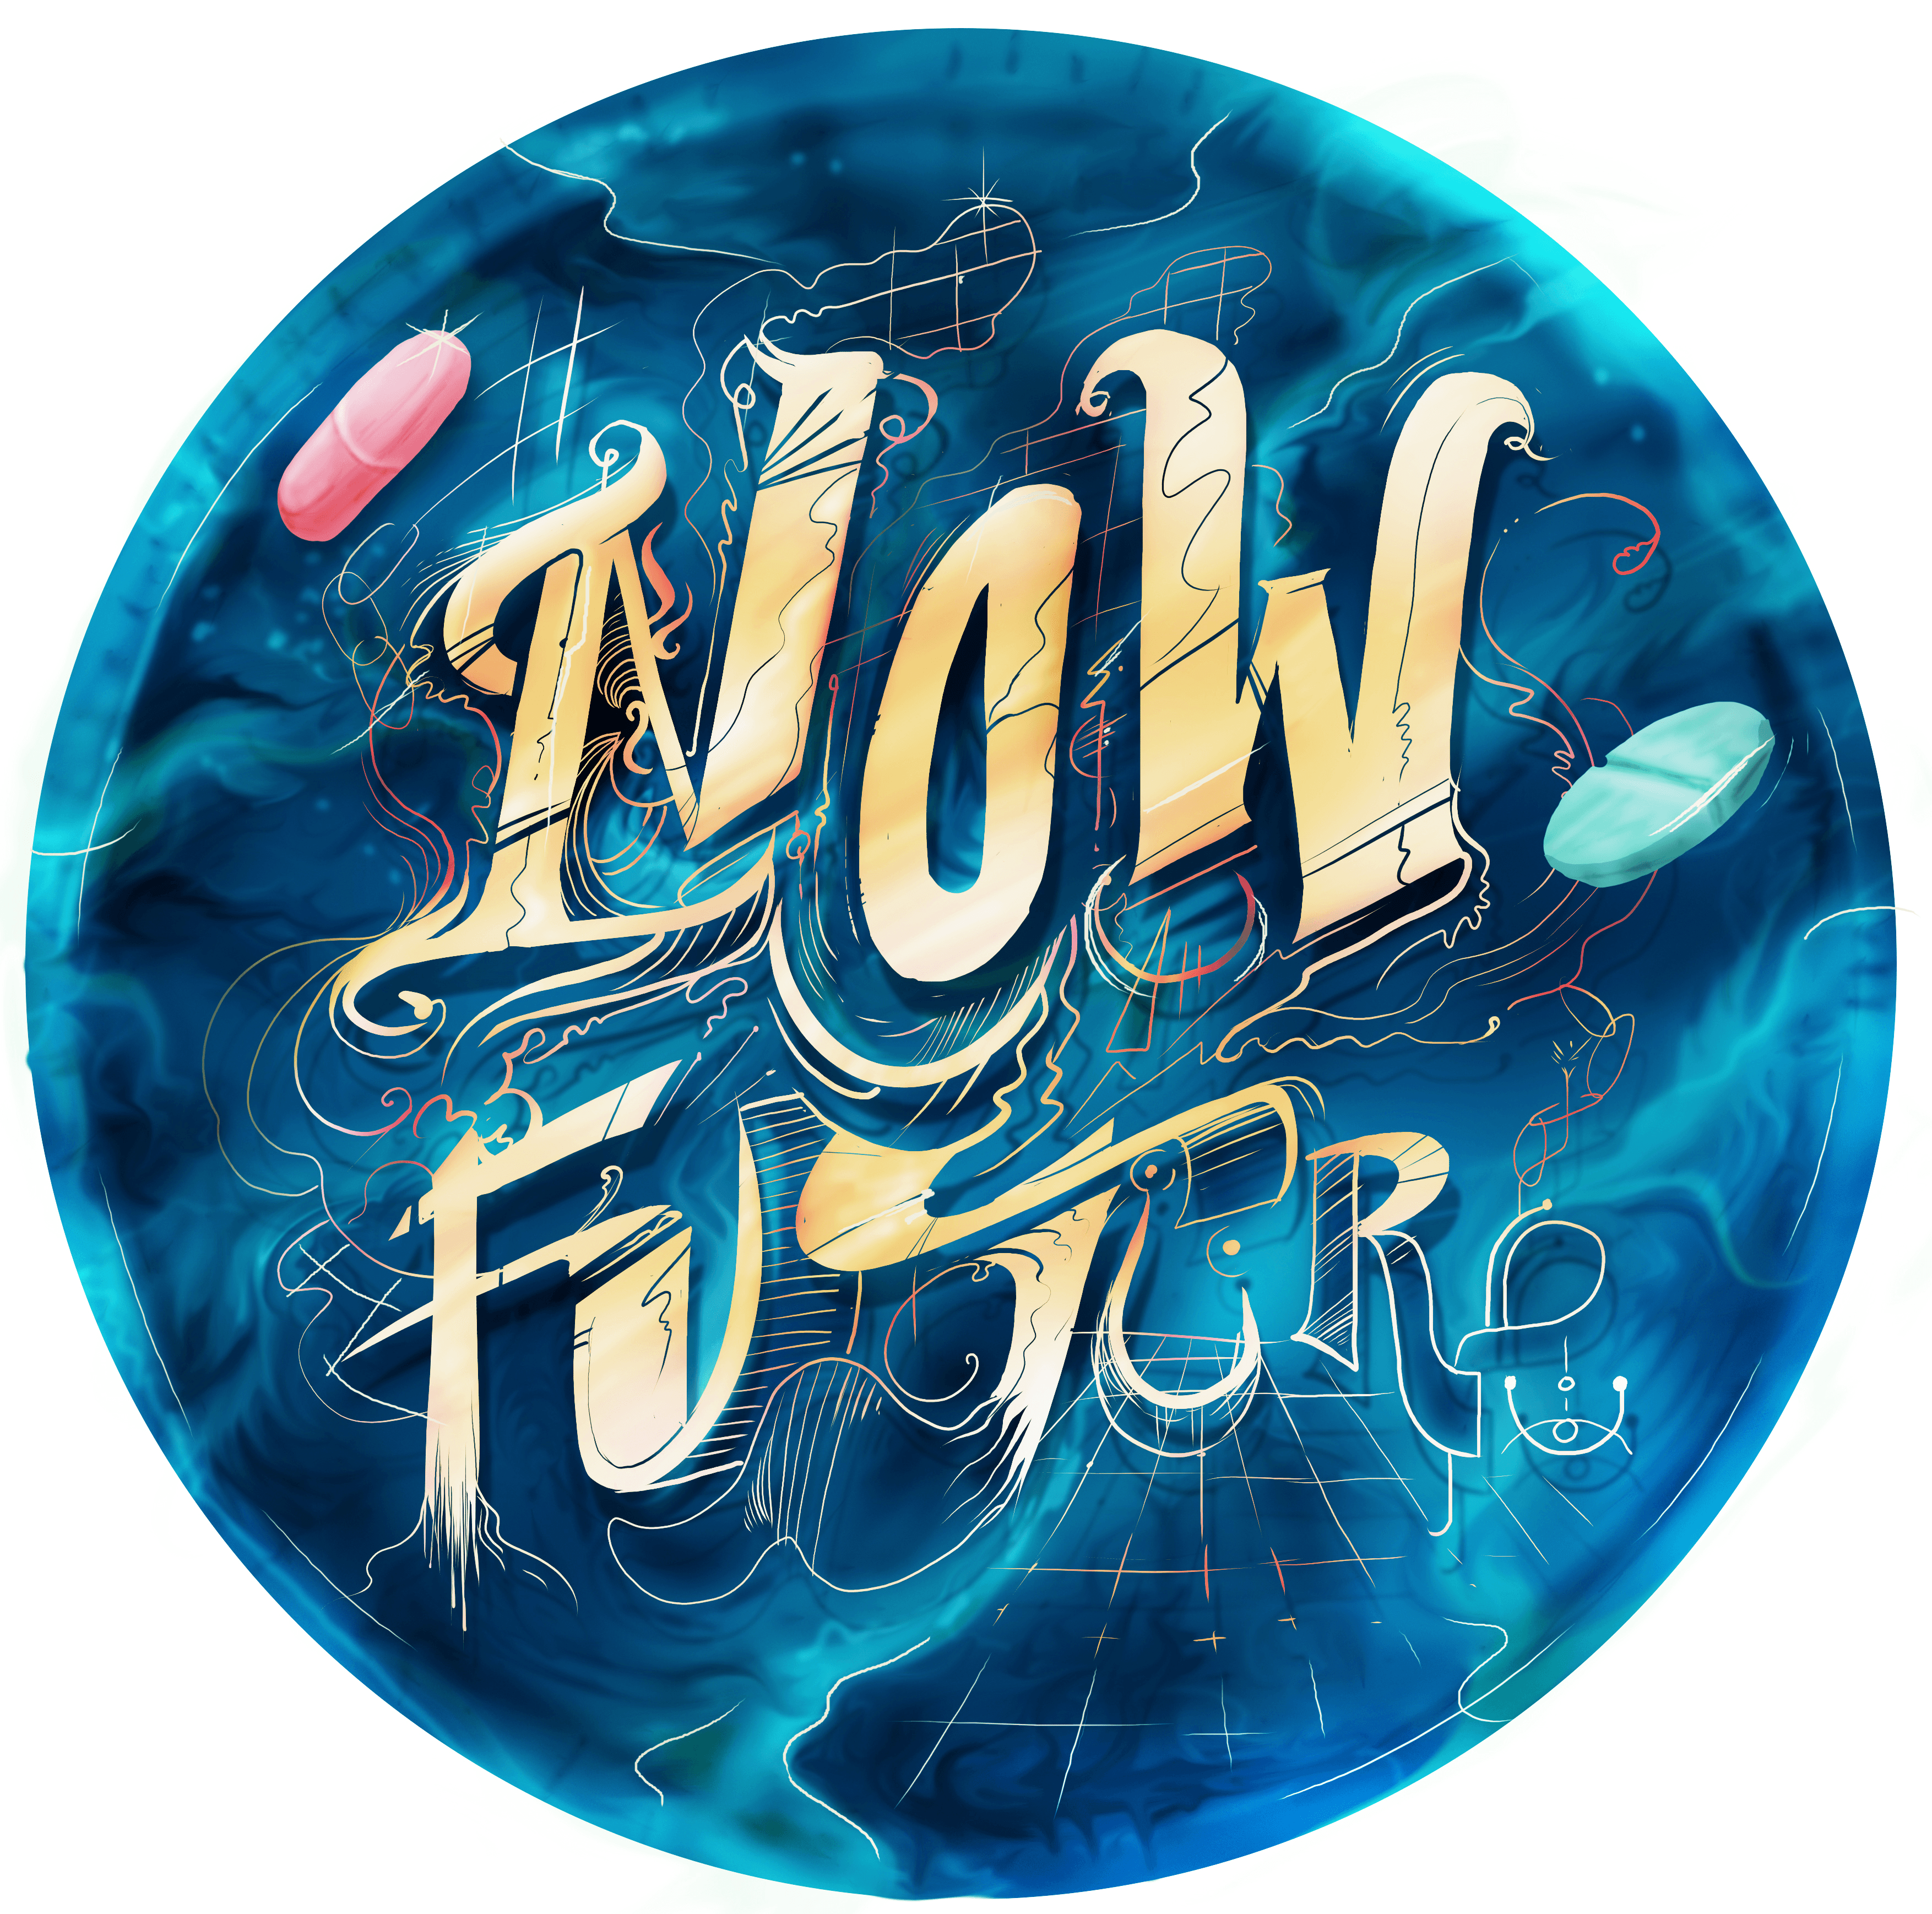 Now-Future